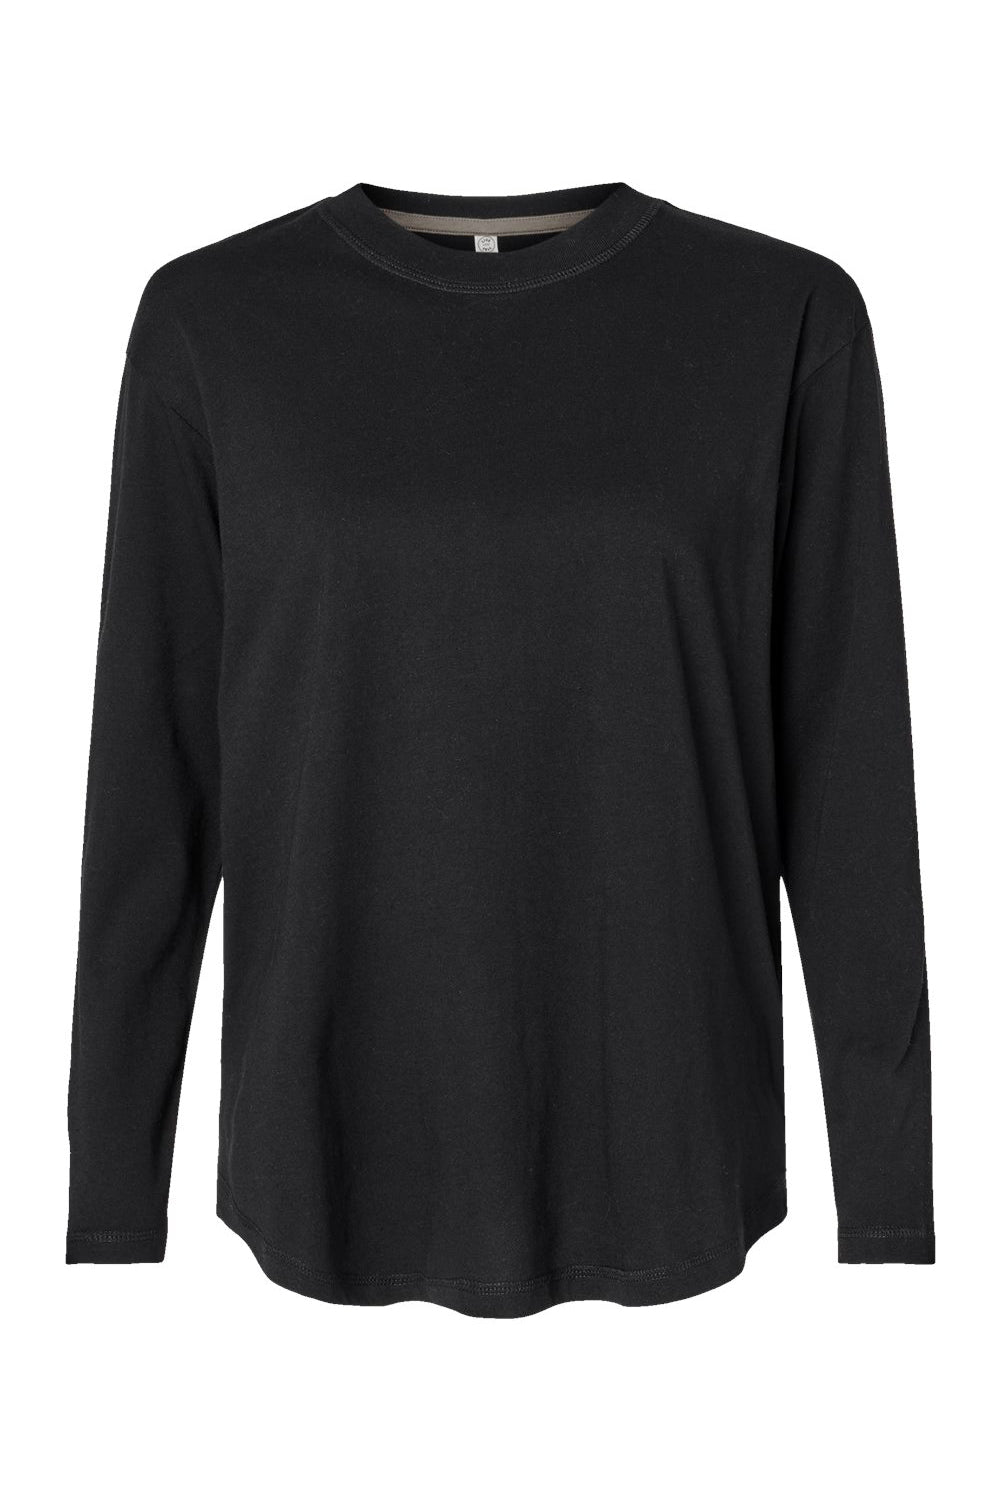 LAT 3508 Womens Fine Jersey Long Sleeve Crewneck T-Shirt Black Flat Front